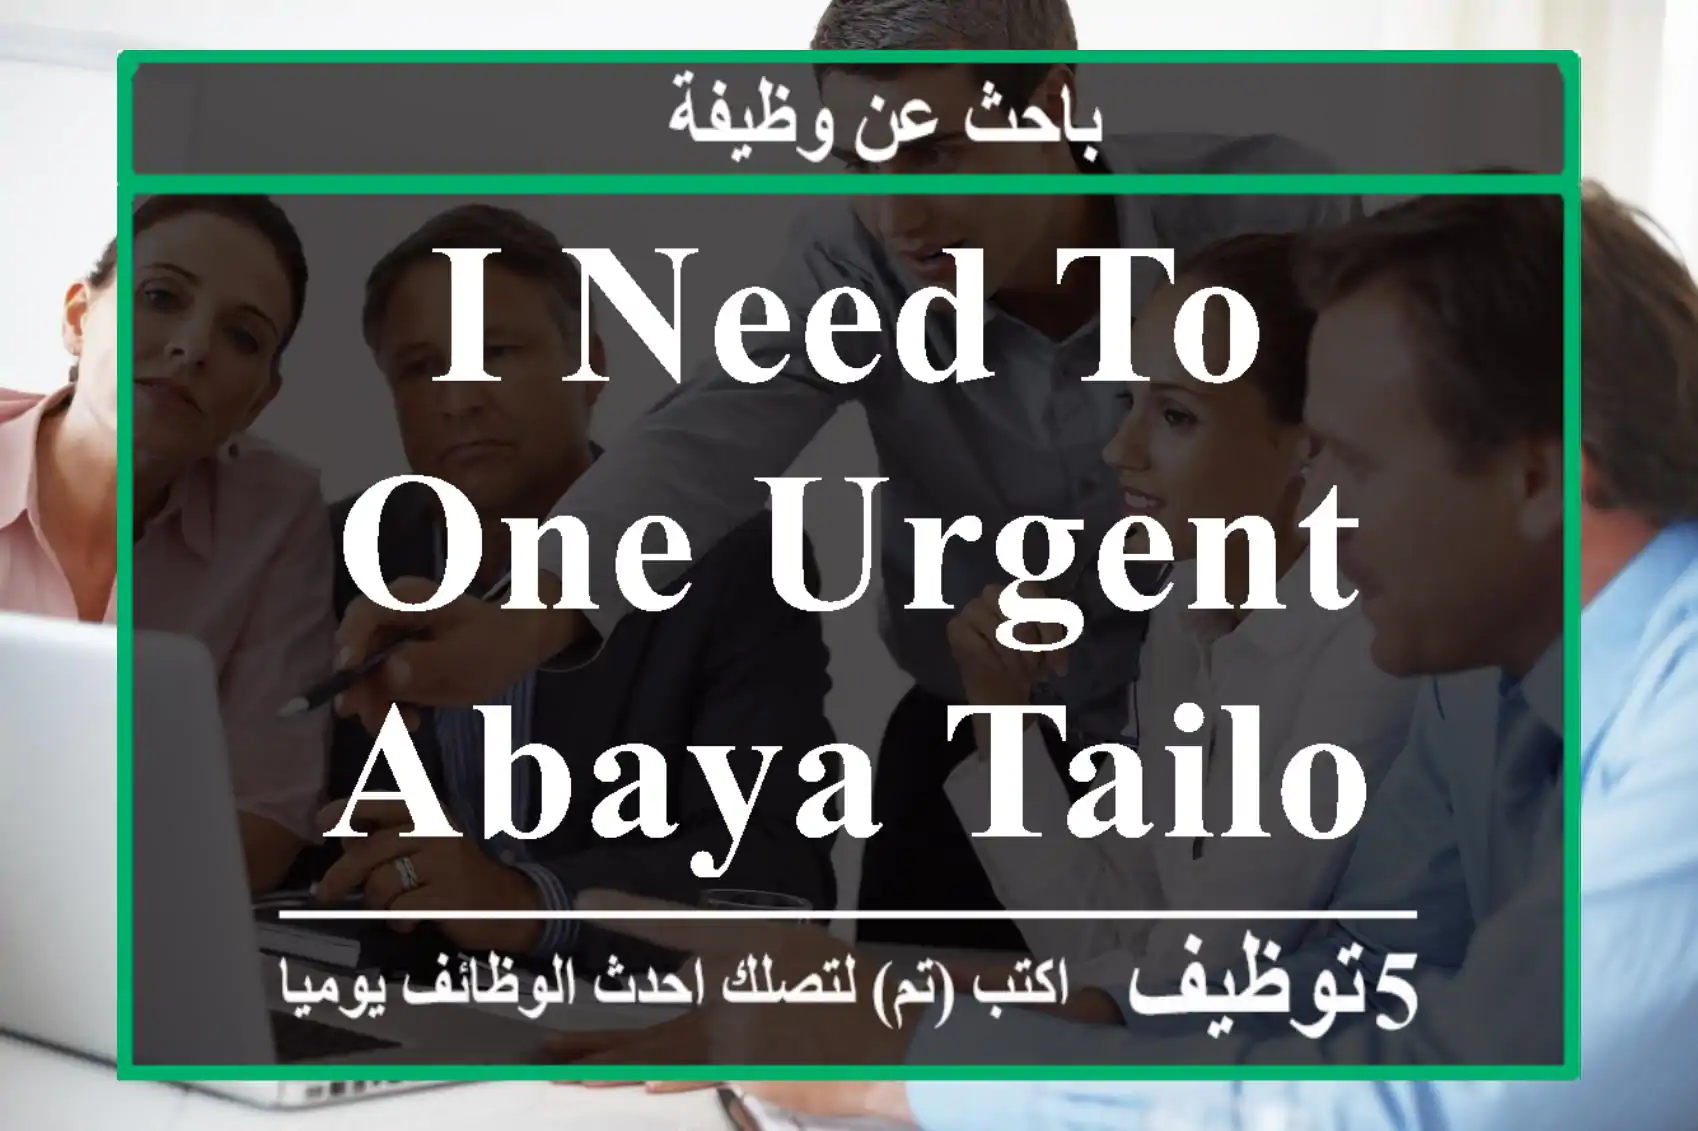 I need to one urgent abaya tailor’s